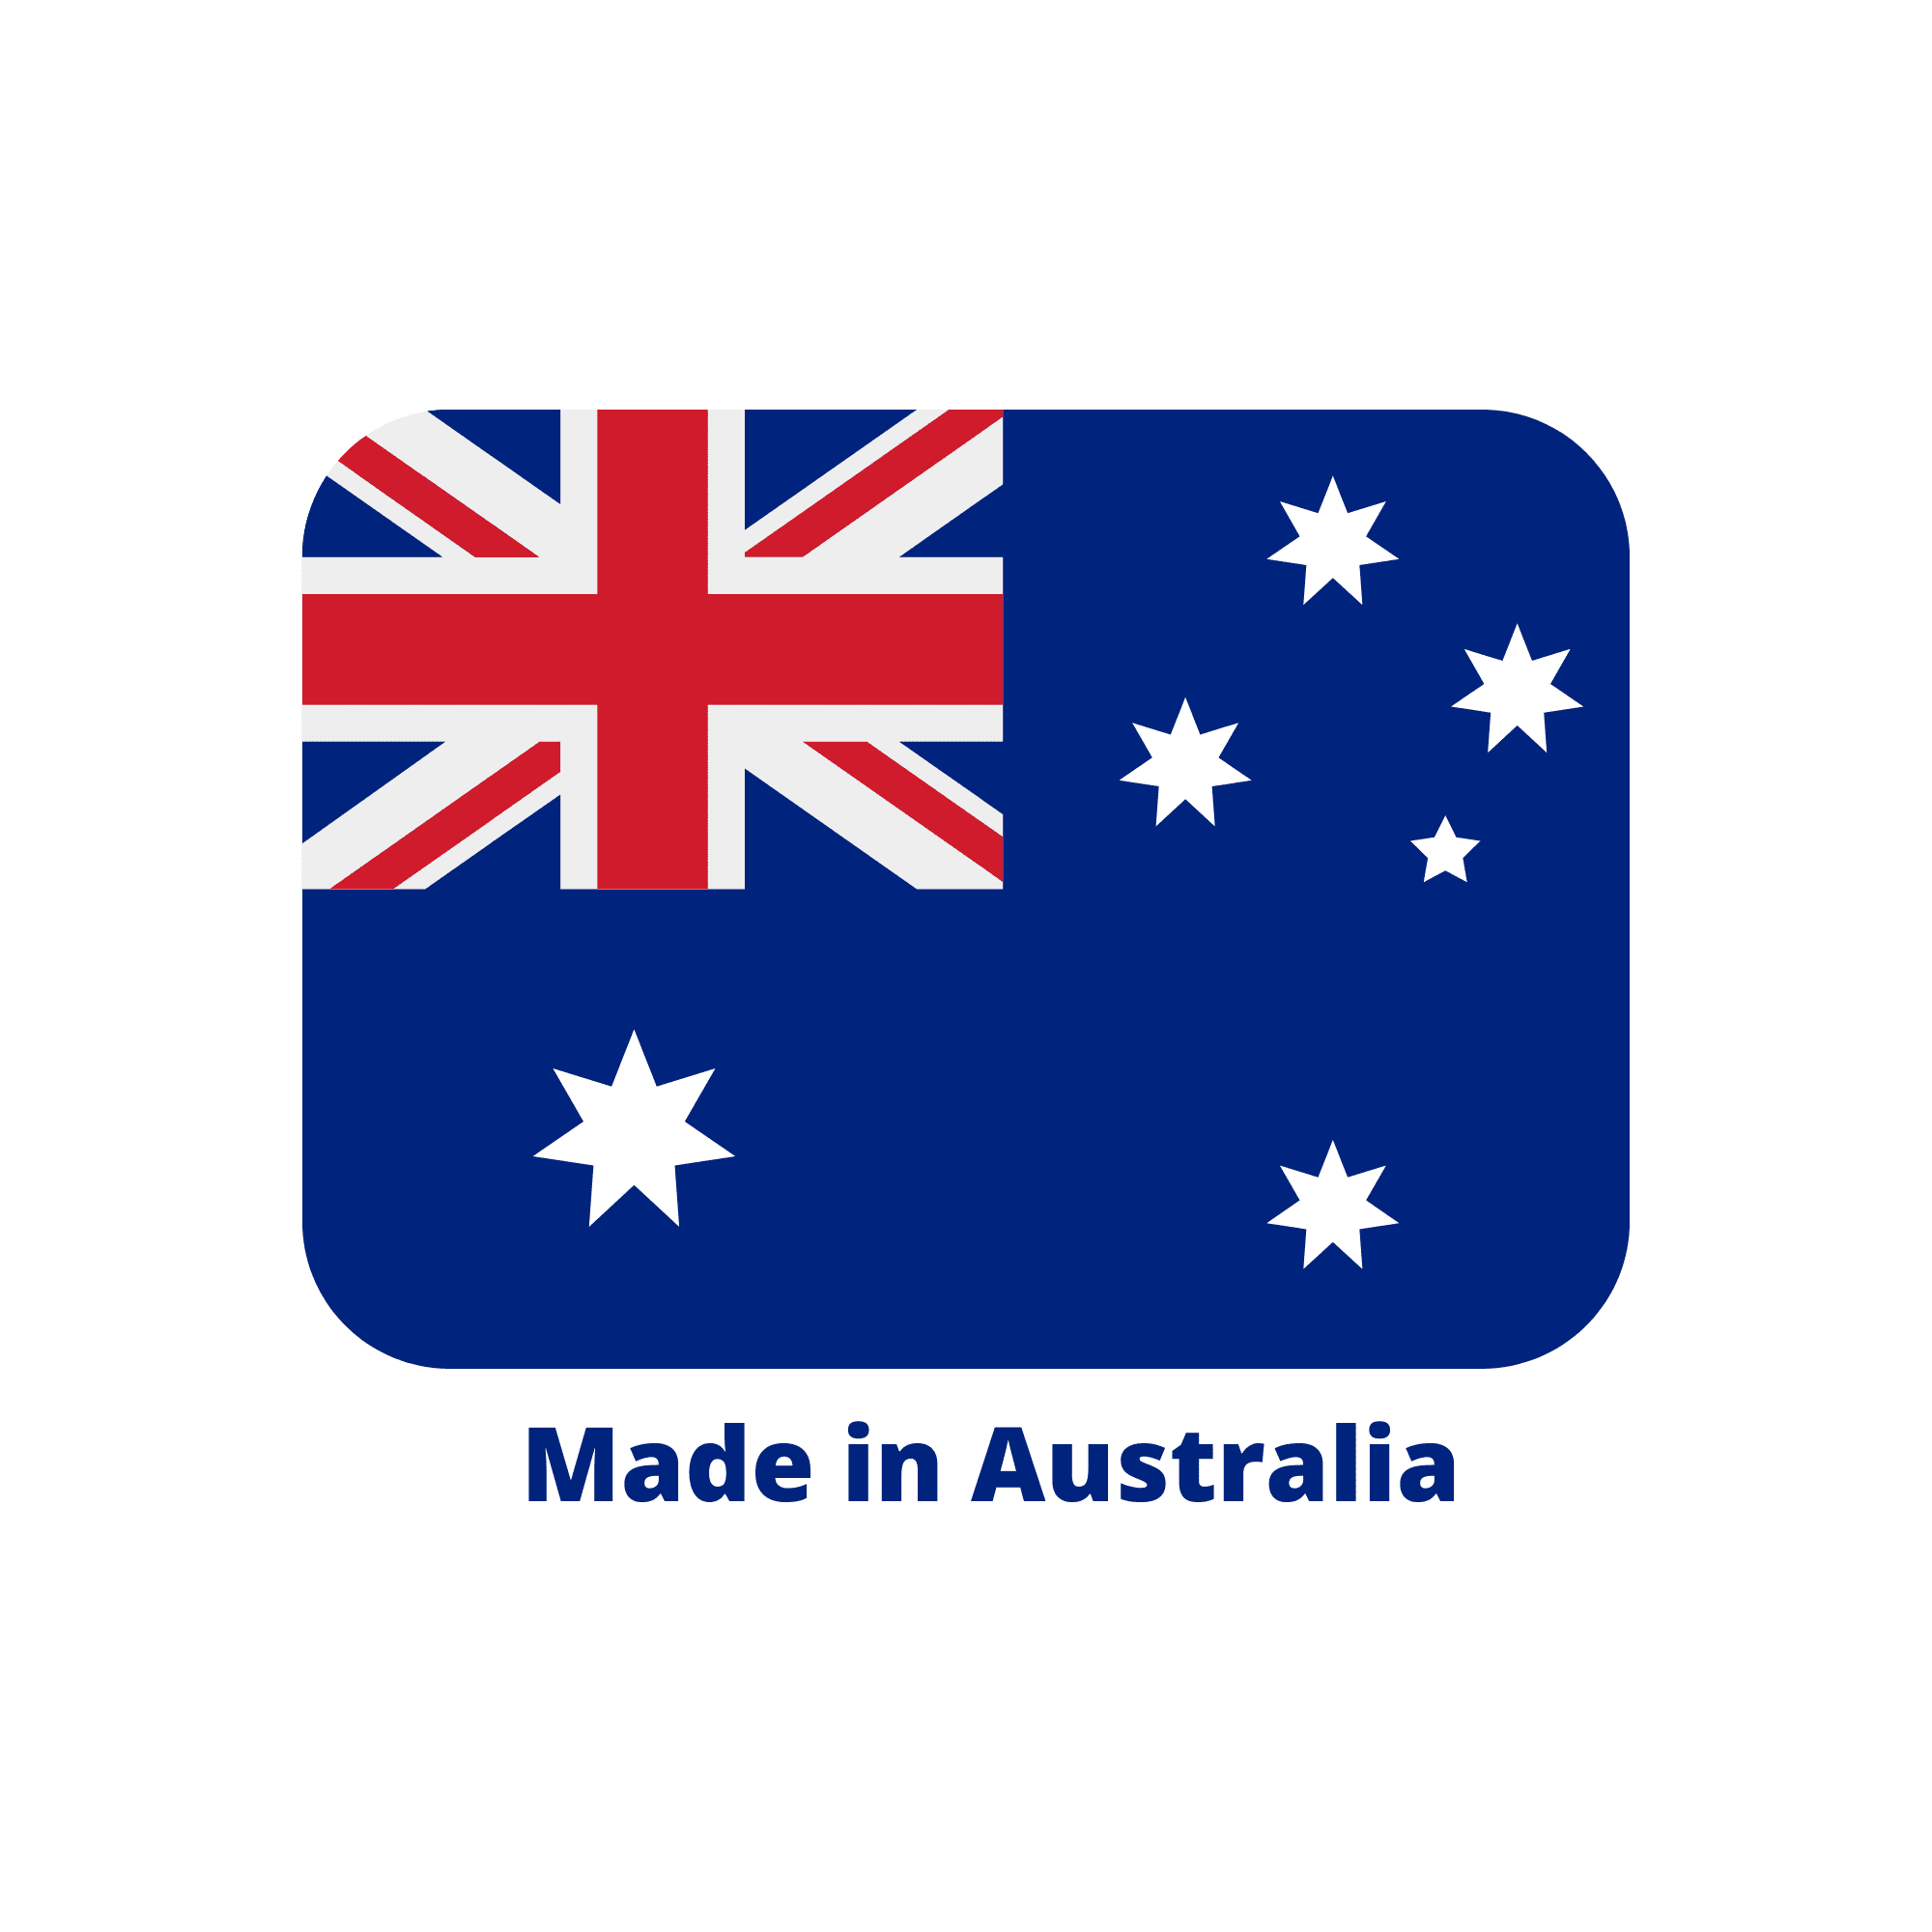 10 packs of Tim Tam Biscuits - Australian Import, Post Free via FEDEX OR DHL